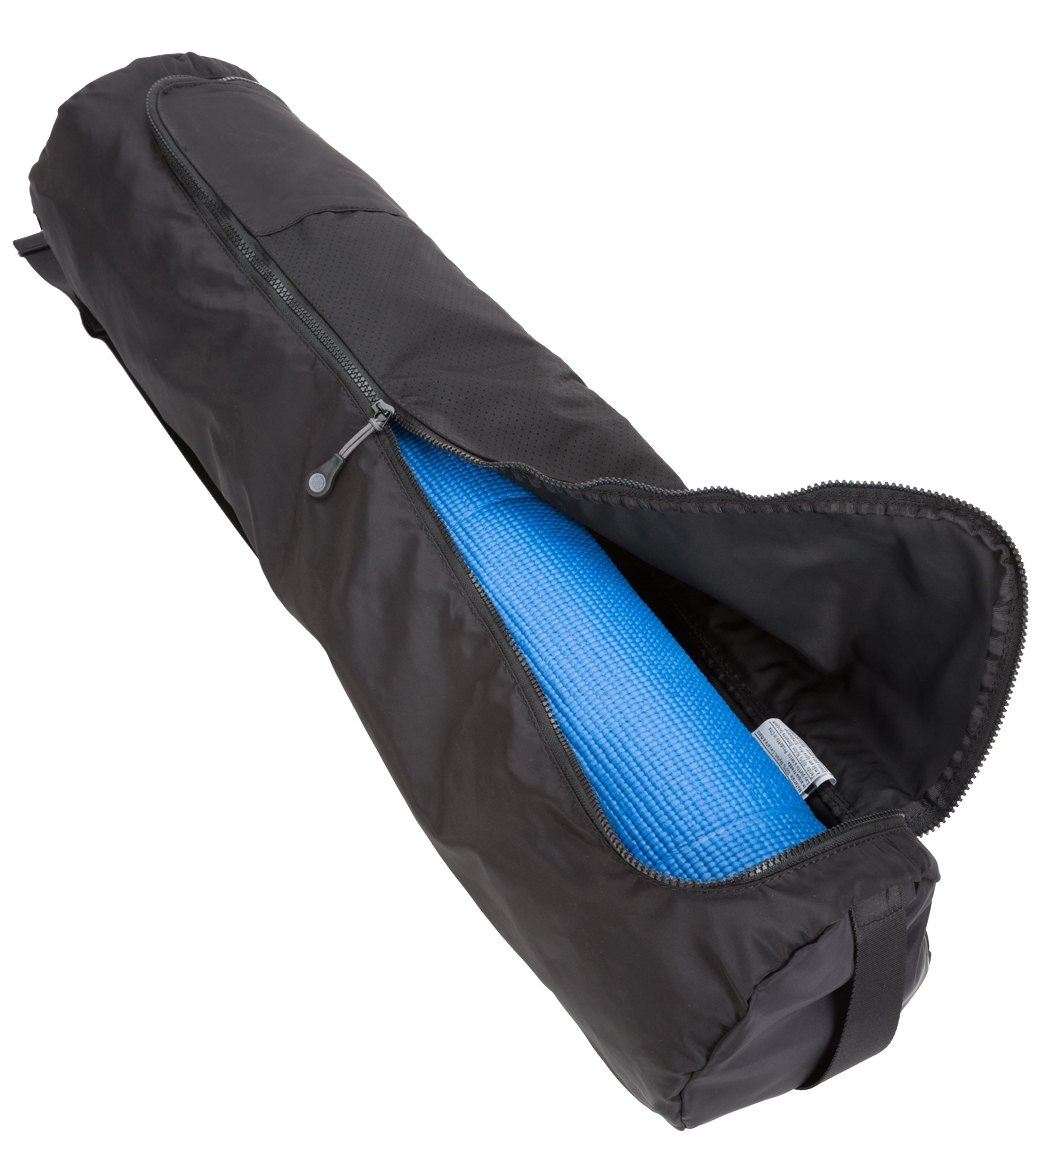 Sports/Fitness: Gaiam Yoga Mat Carrier $10.50 (Reg. $15+), Sports  Hiking/Fishing Shoulder Pack $15 (Reg. $28), more